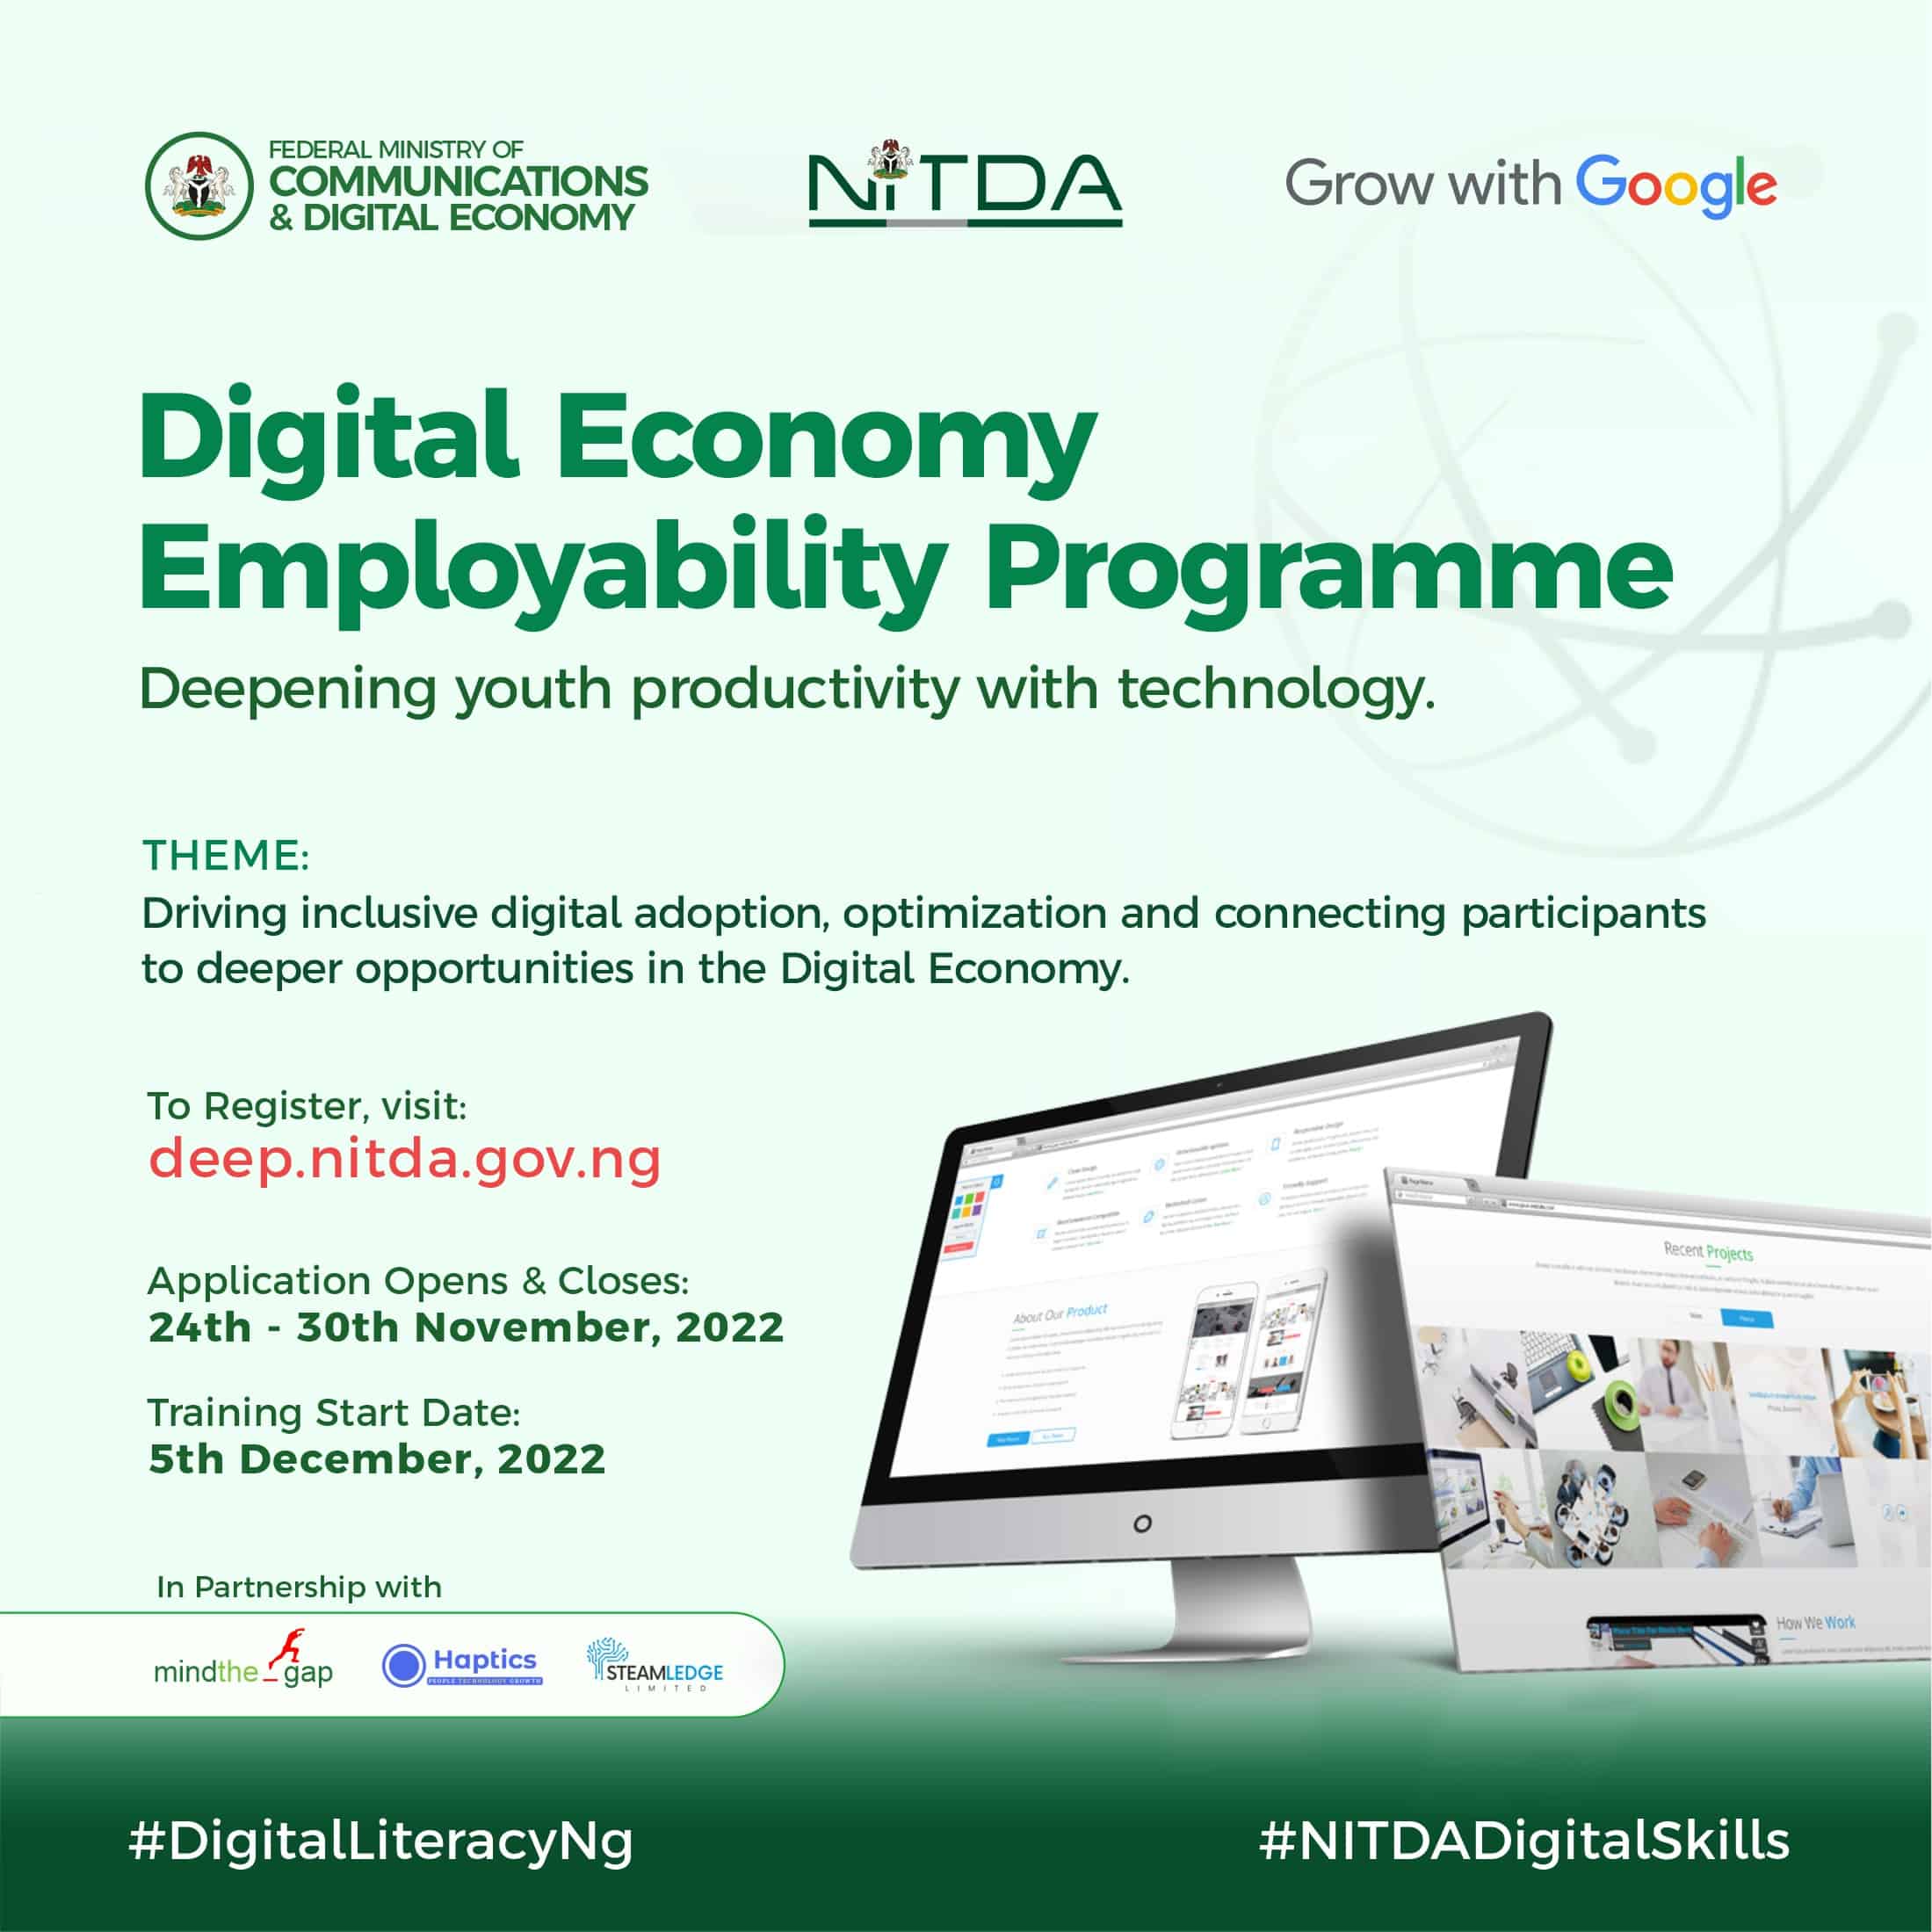 NITDA Digital Economy Employability Programme